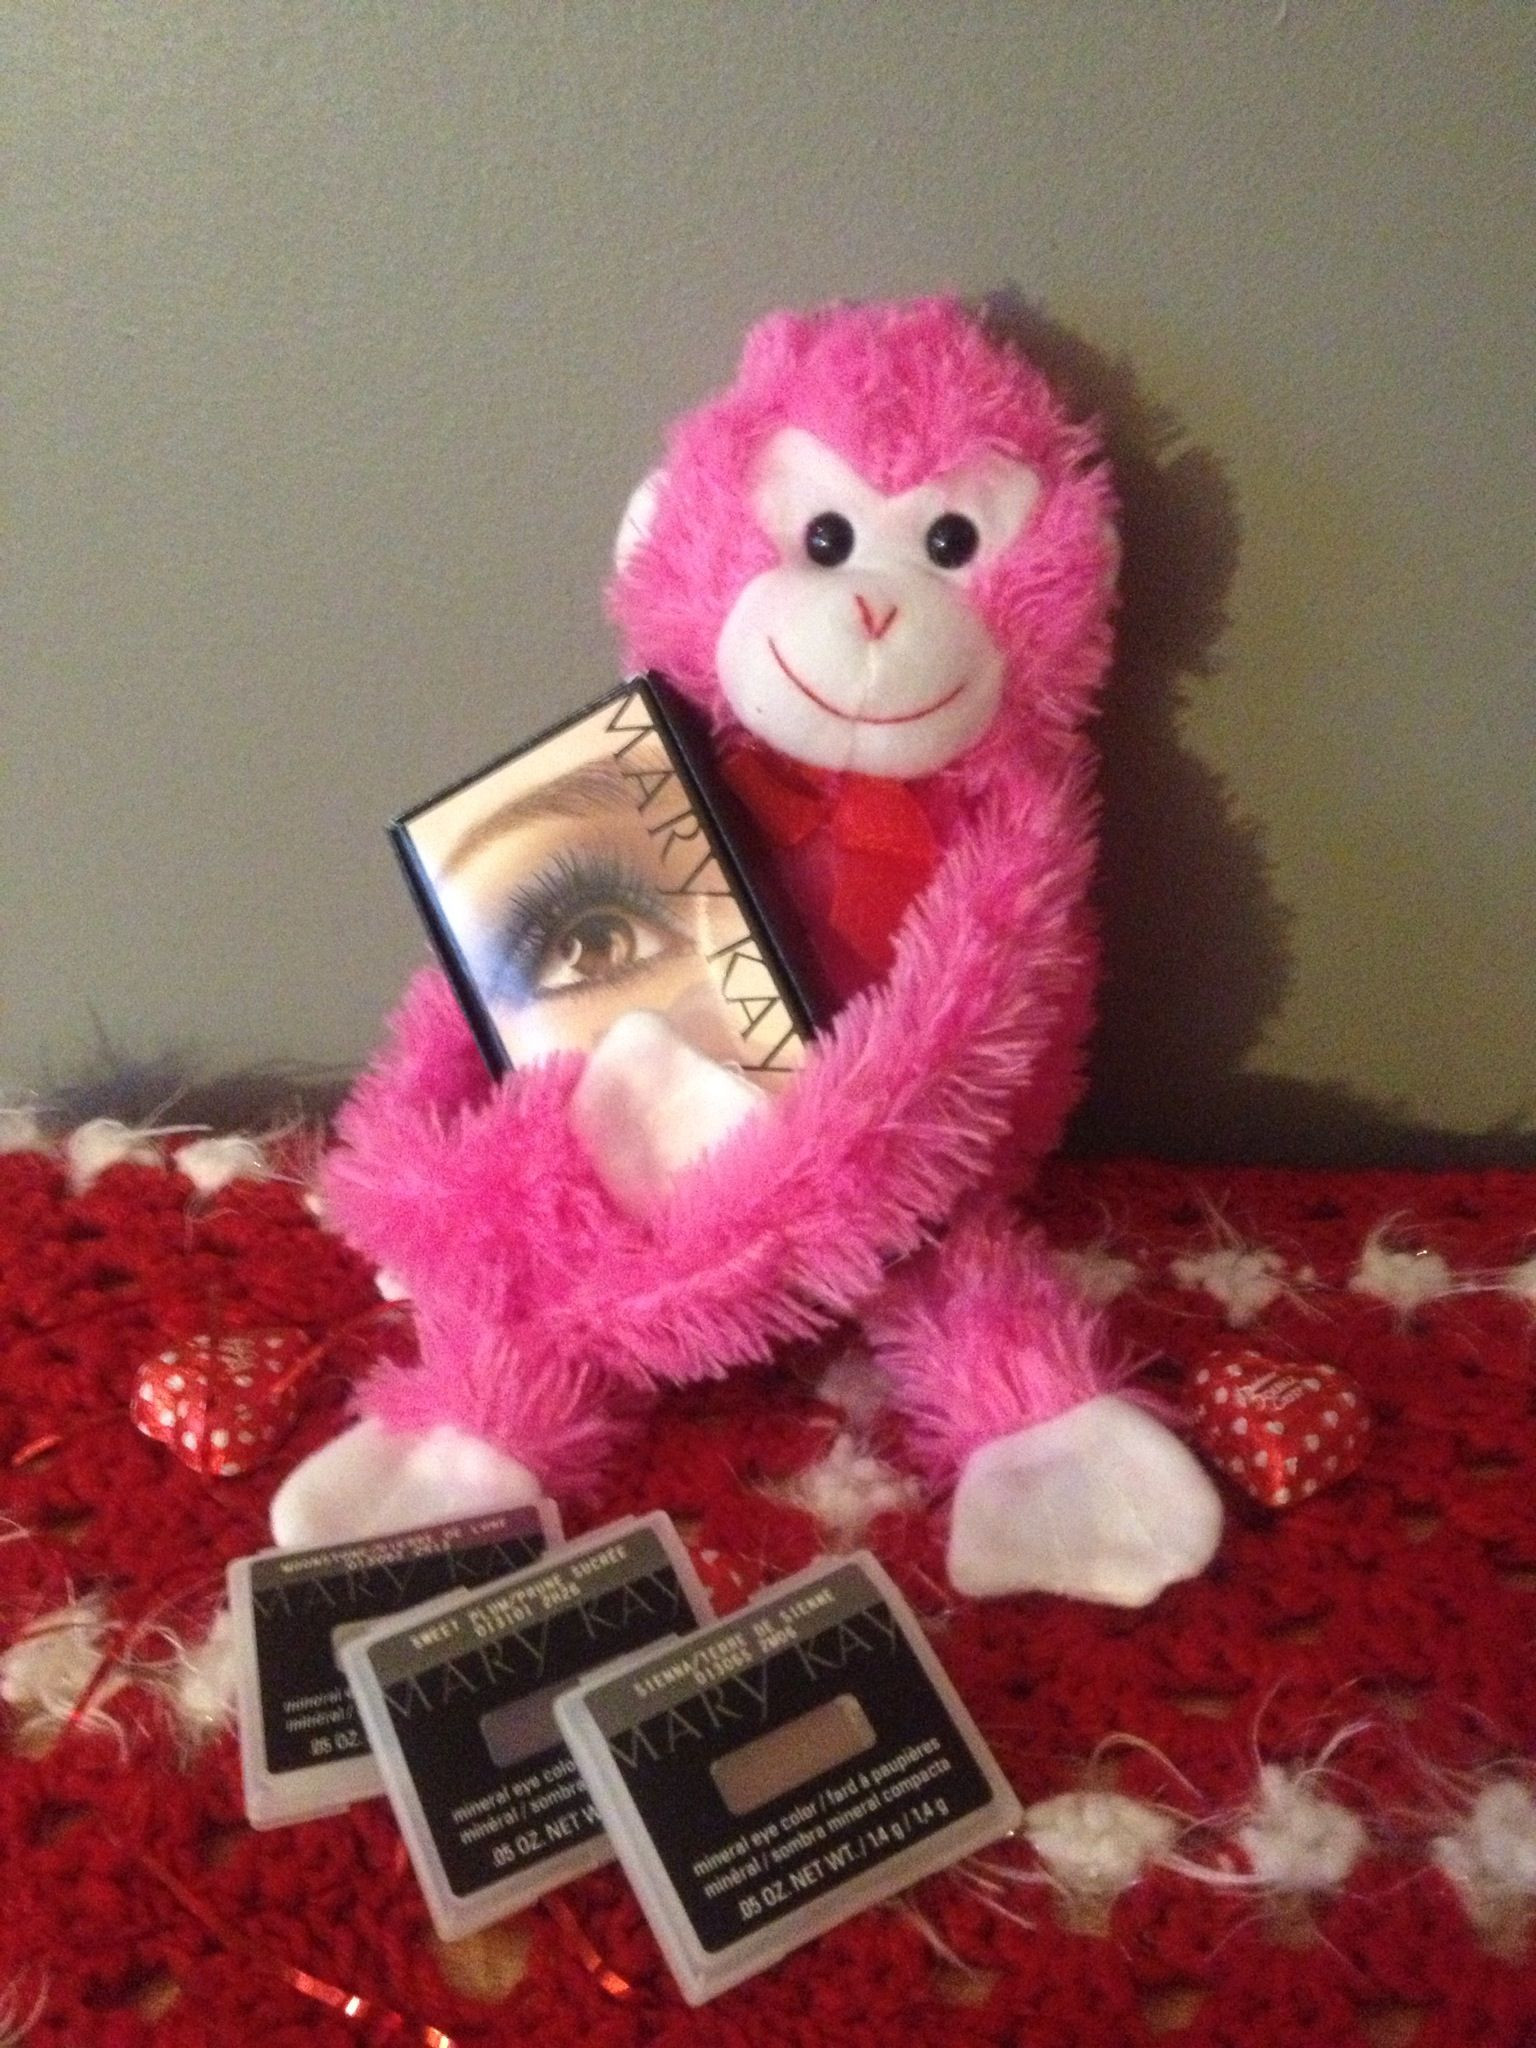 Mary Kay Valentine Gift Ideas
 Valentines day t ideas Mary Kay love monkey with eye